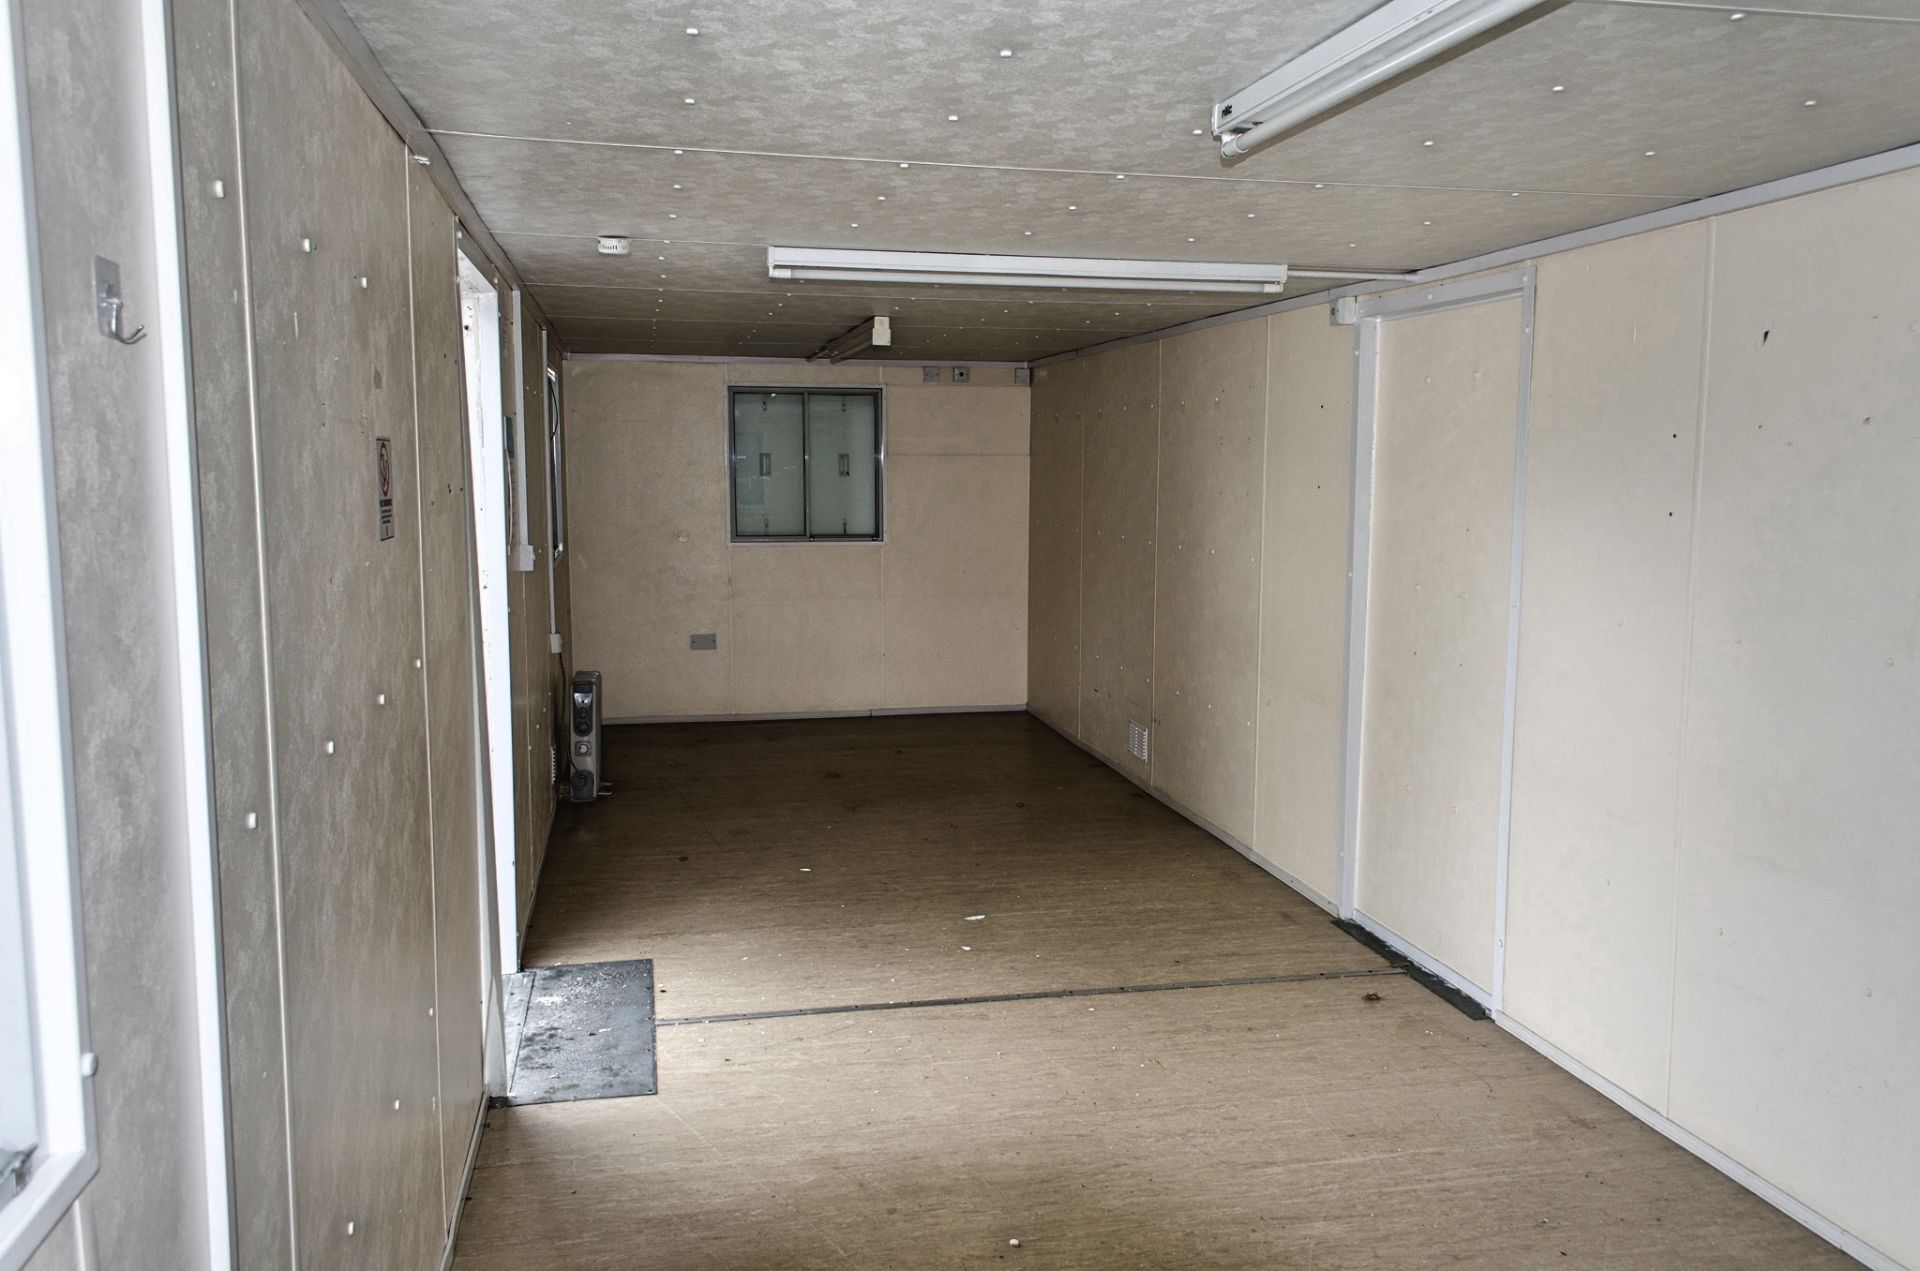 32 ft x 10 ft steel anti vandal office site unit A579645 ** External door missing ** - Image 6 of 6